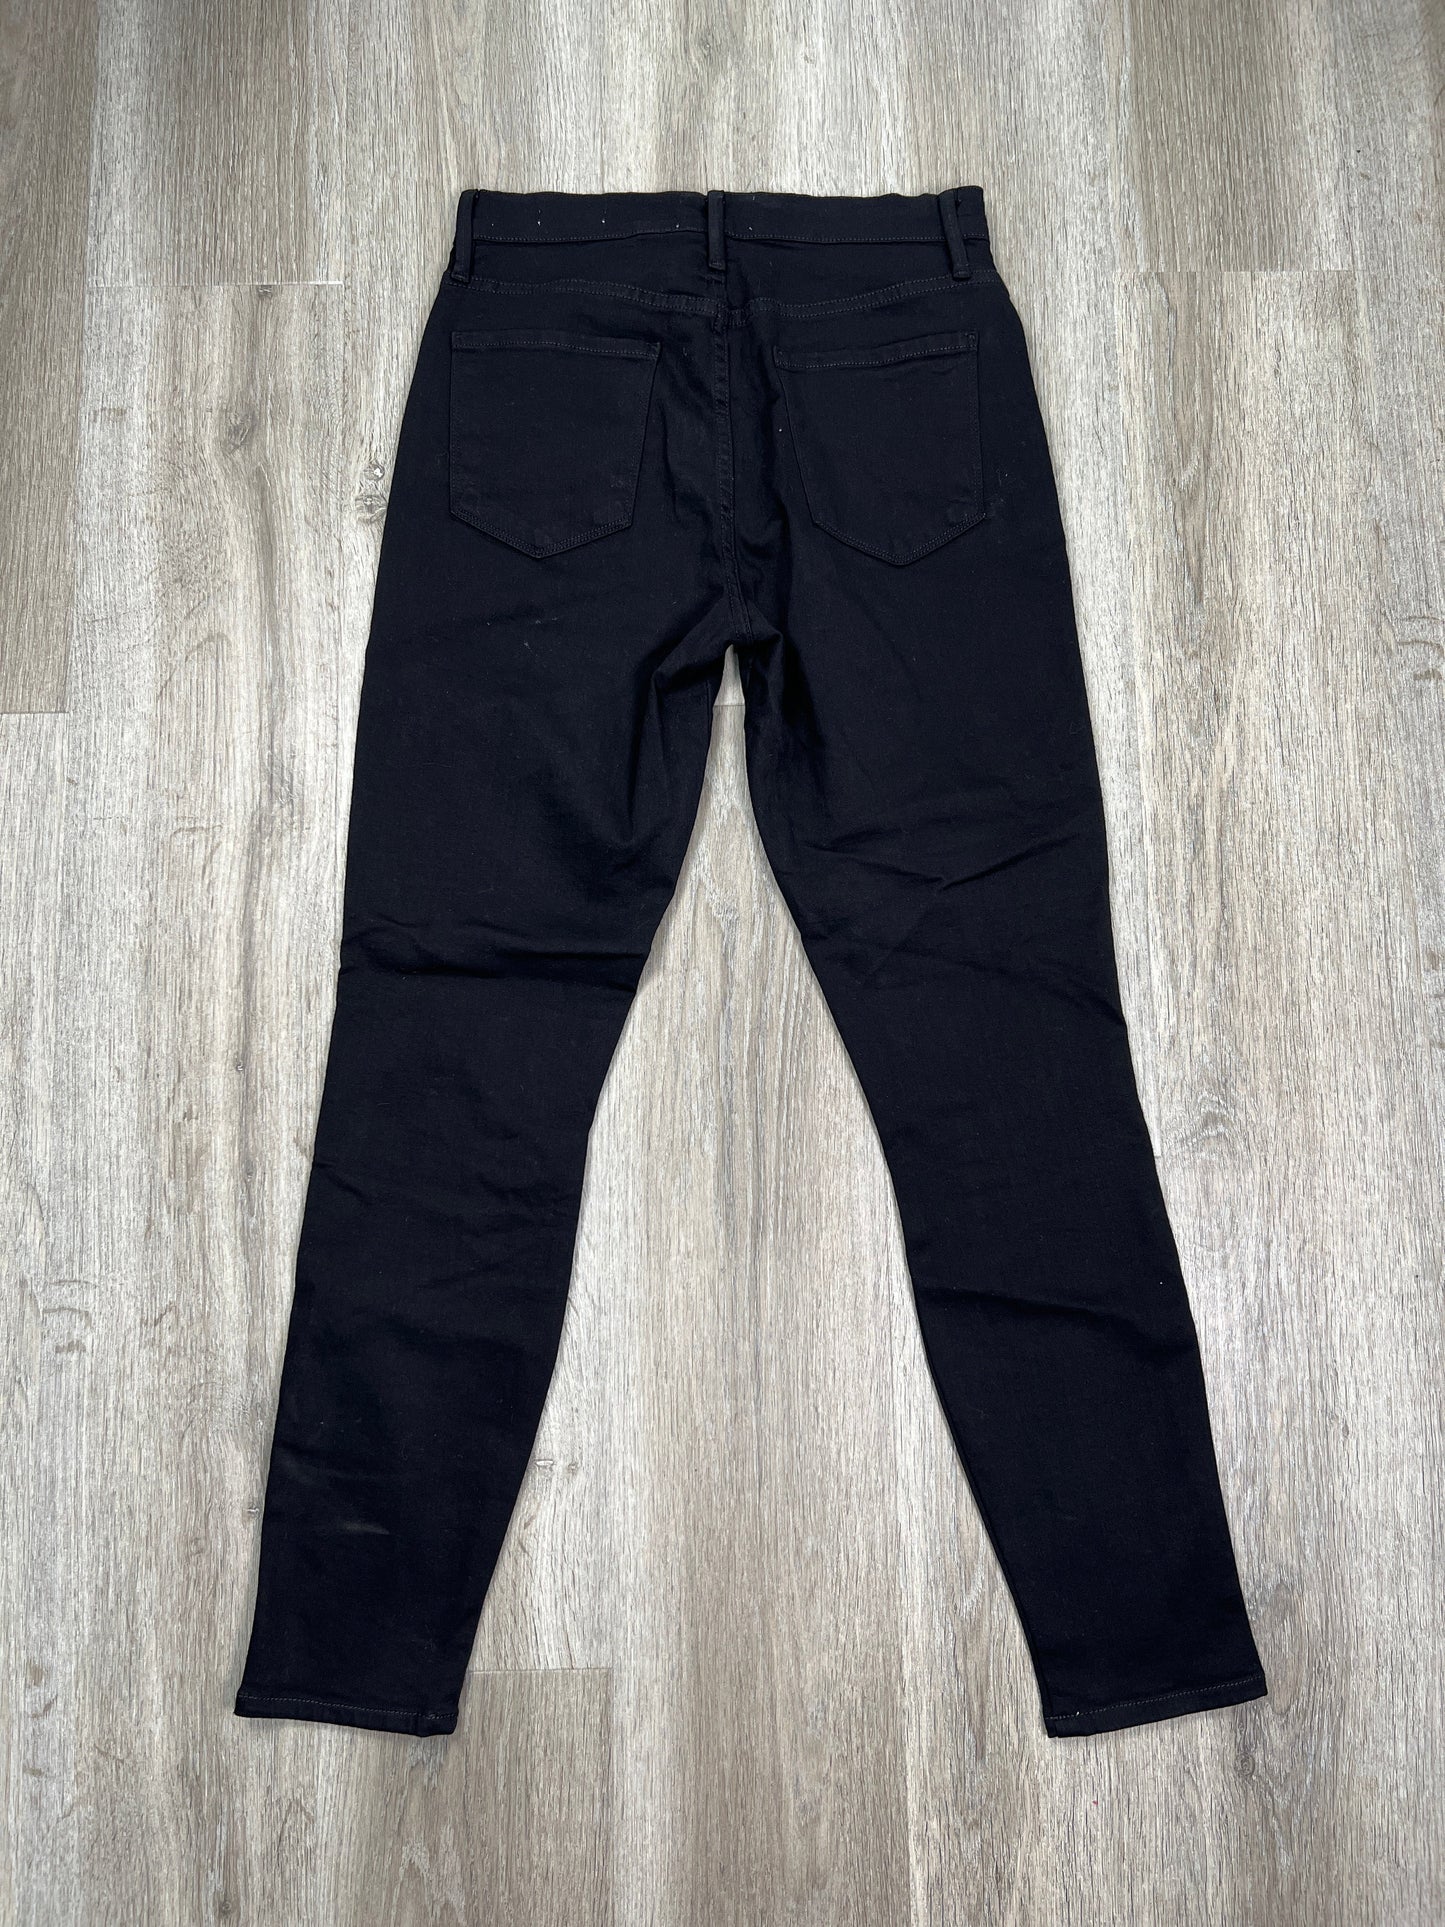 Black Denim Jeans Straight Frame, Size 6